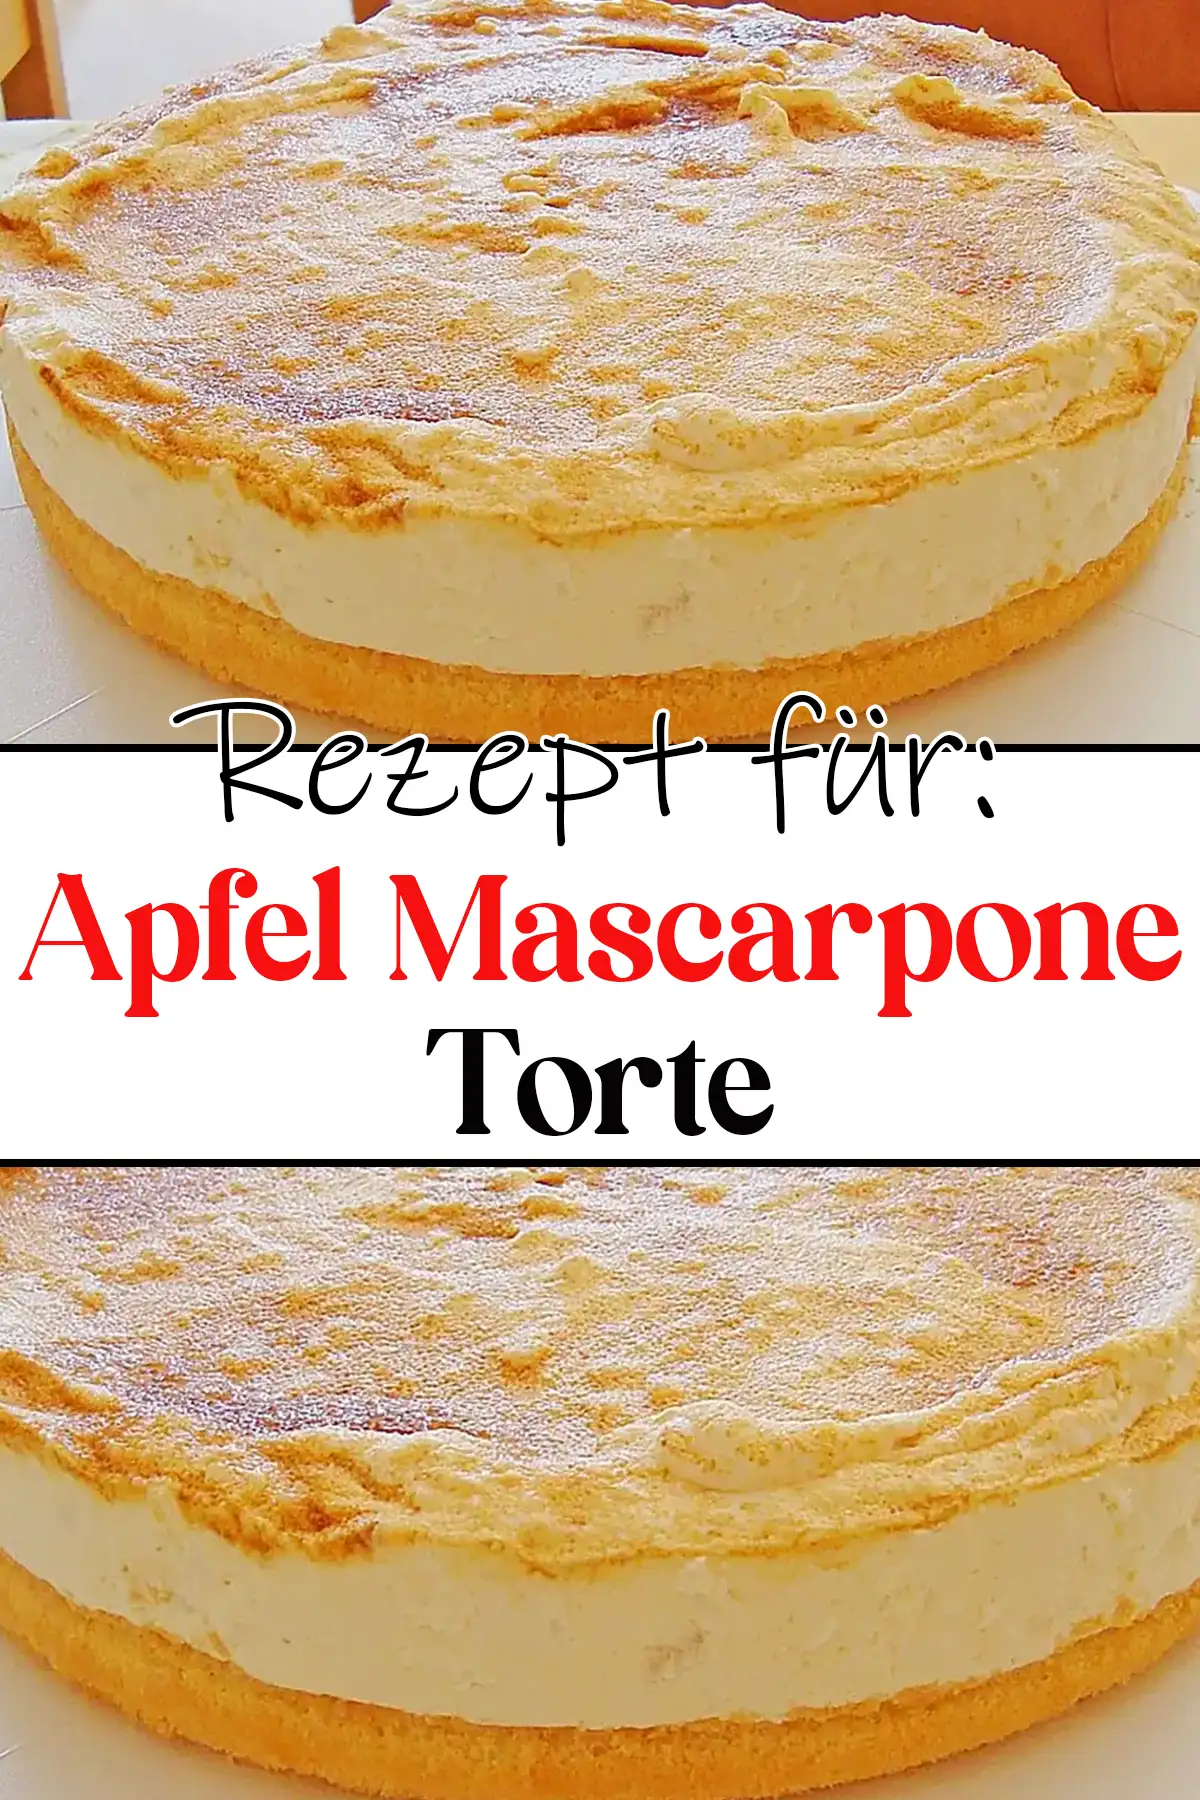 Apfel Mascarpone Torte Rezept